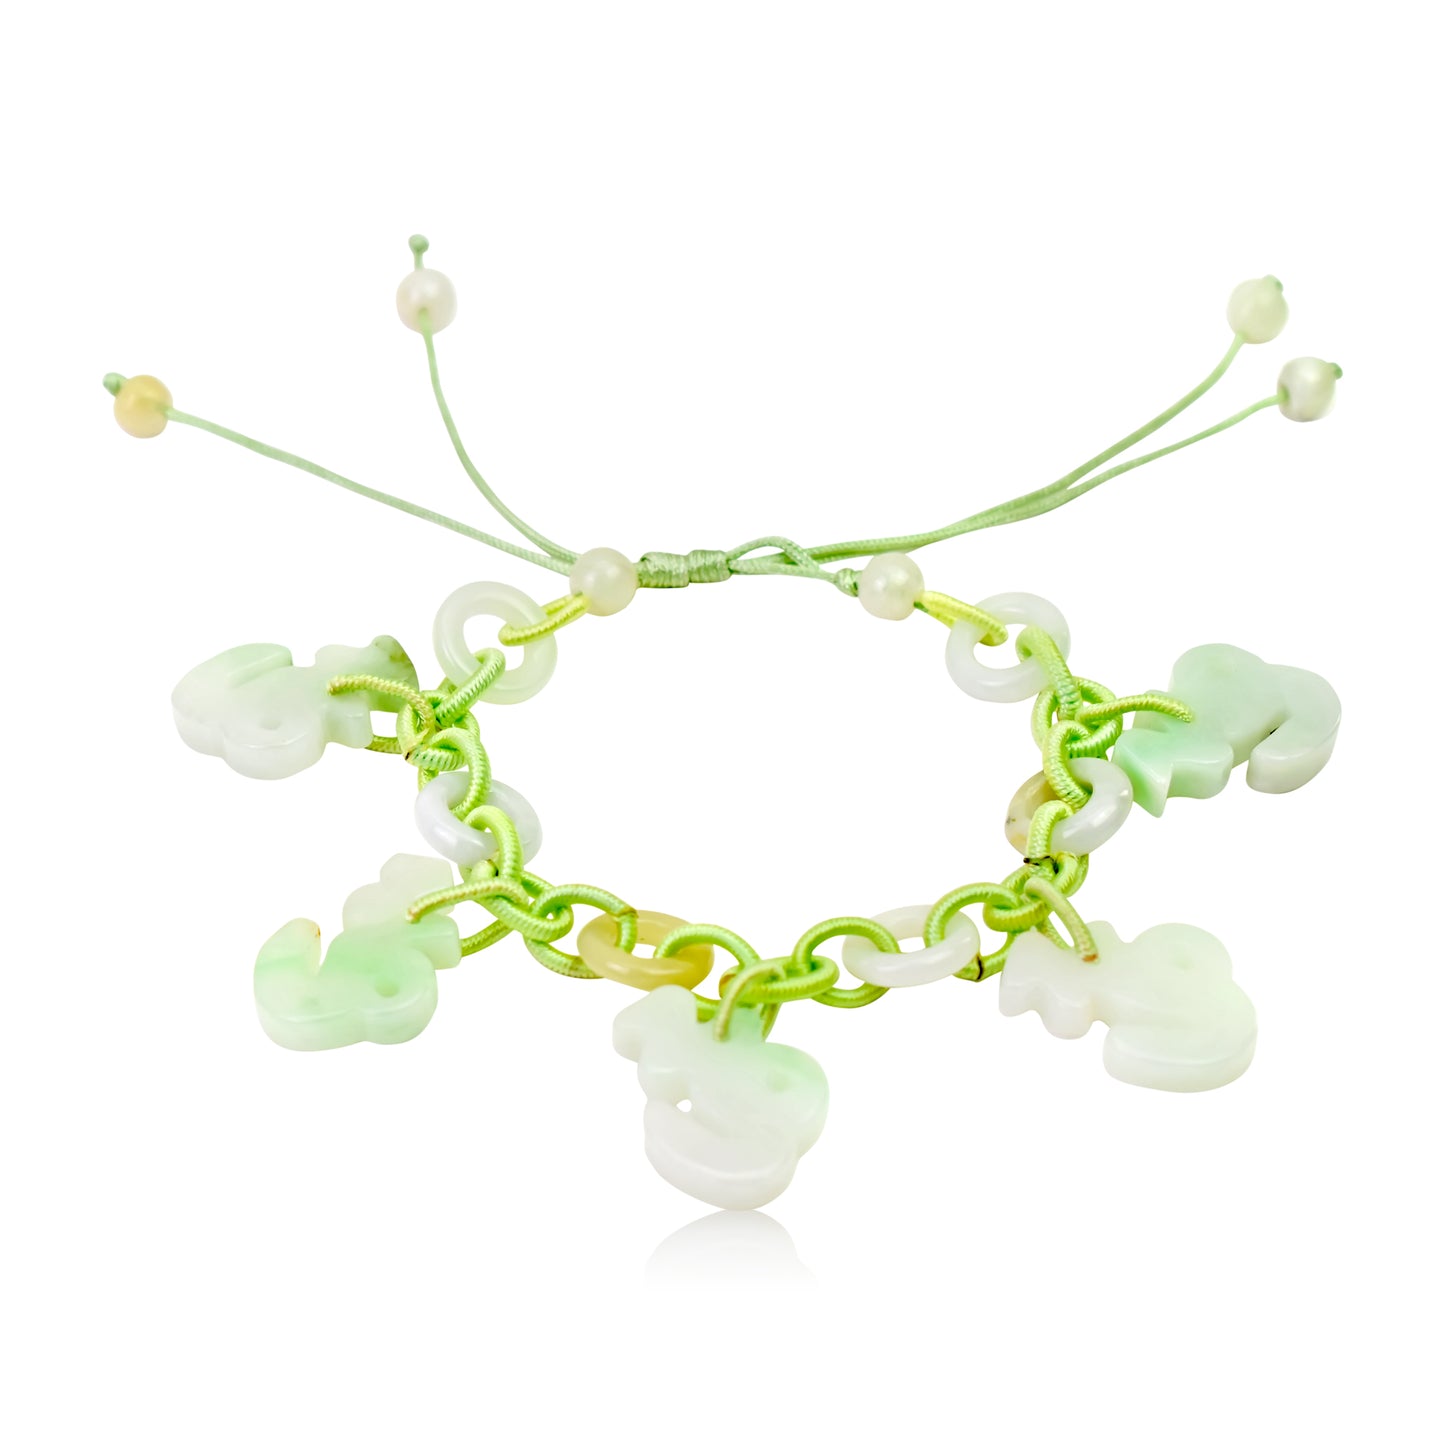 Honor the Capricorn Zodiac with Handmade Jade Jewelry Bracelet made with Sea Green Cord